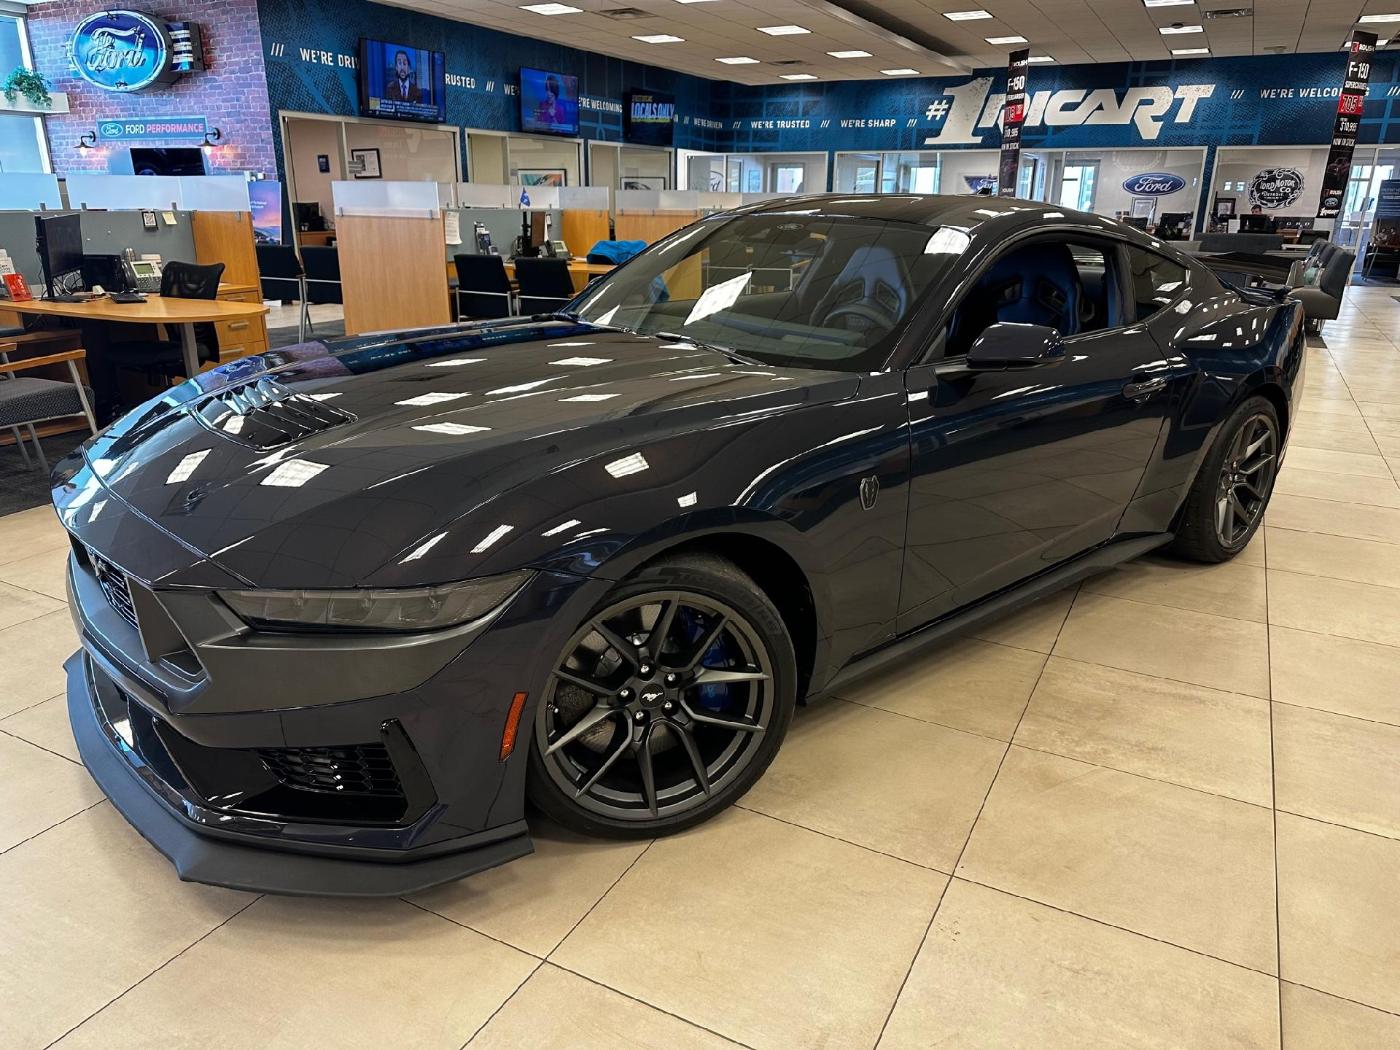 S650 Mustang 2024 Dark Horse on display at dealer "For Sale" (Blue Ember) 32180516967x1400